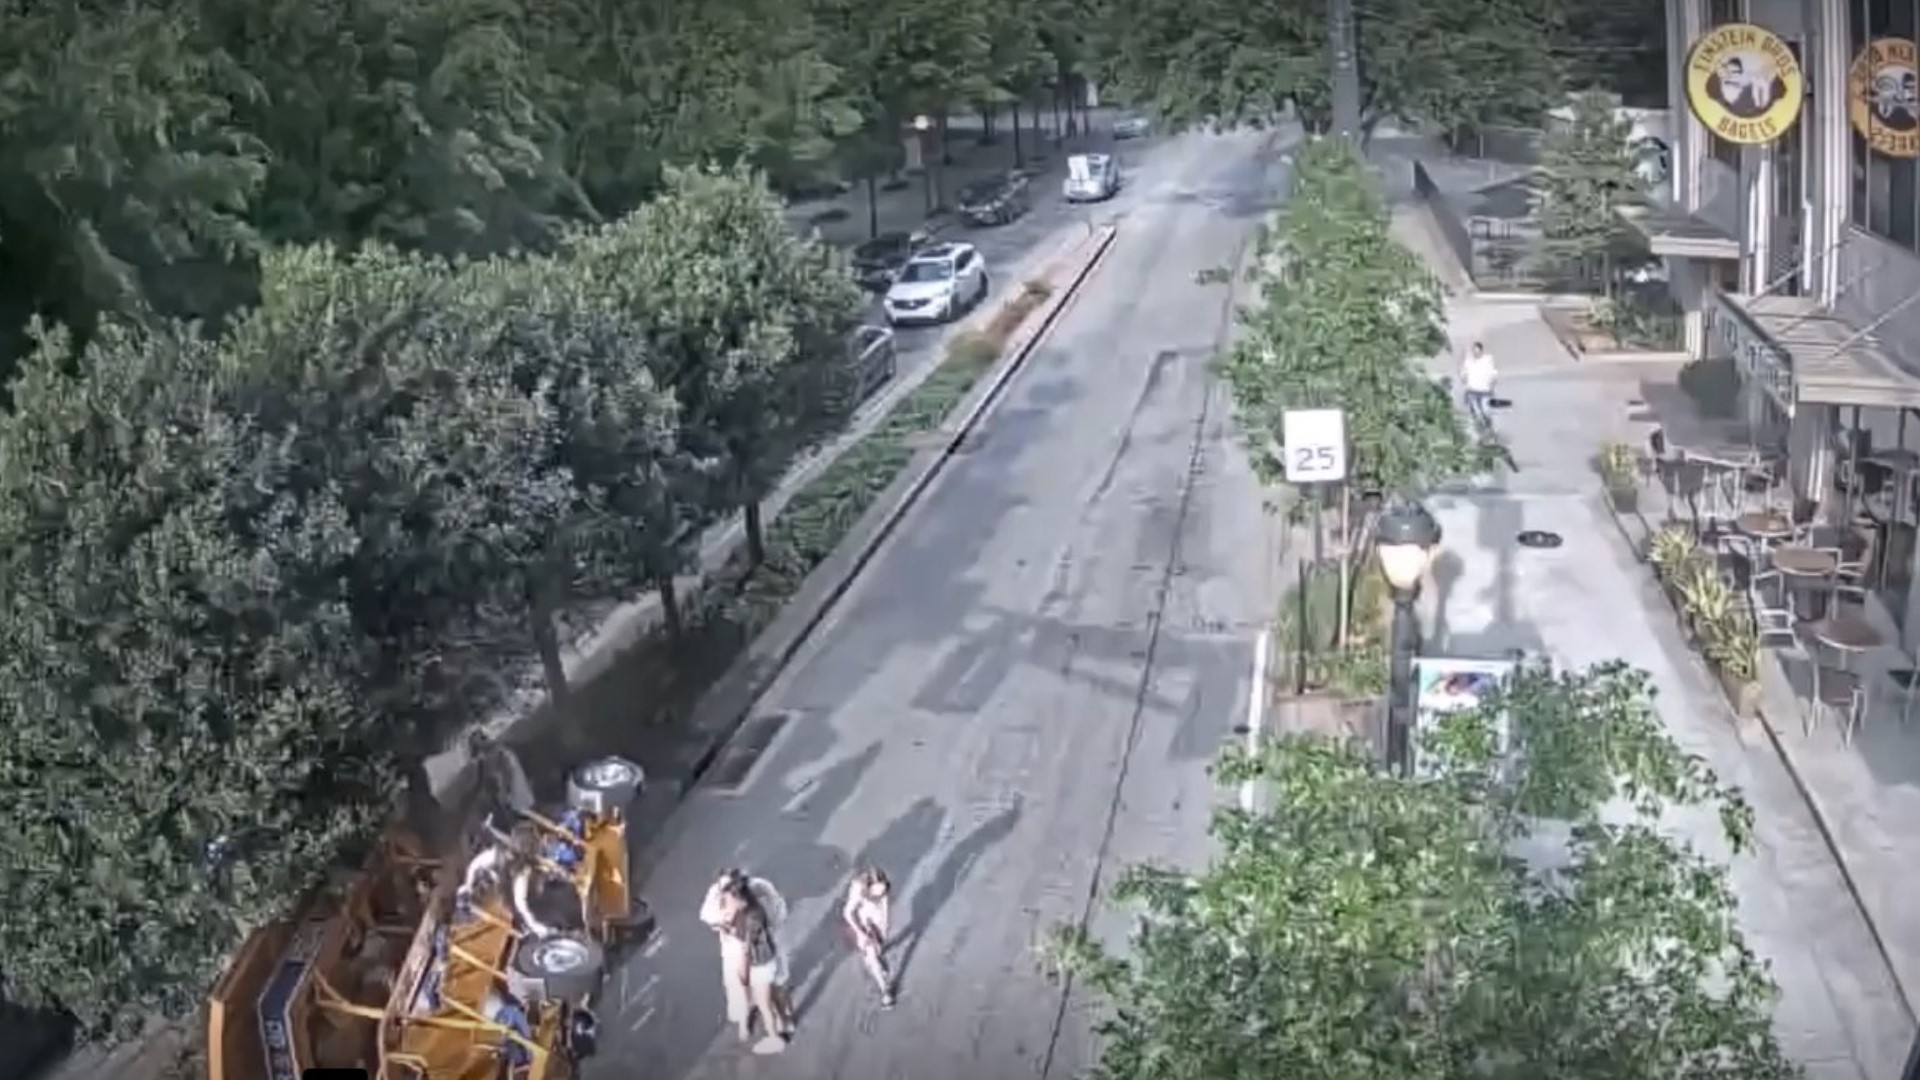 Atlanta Police released surveillance video Monday showing the crash.